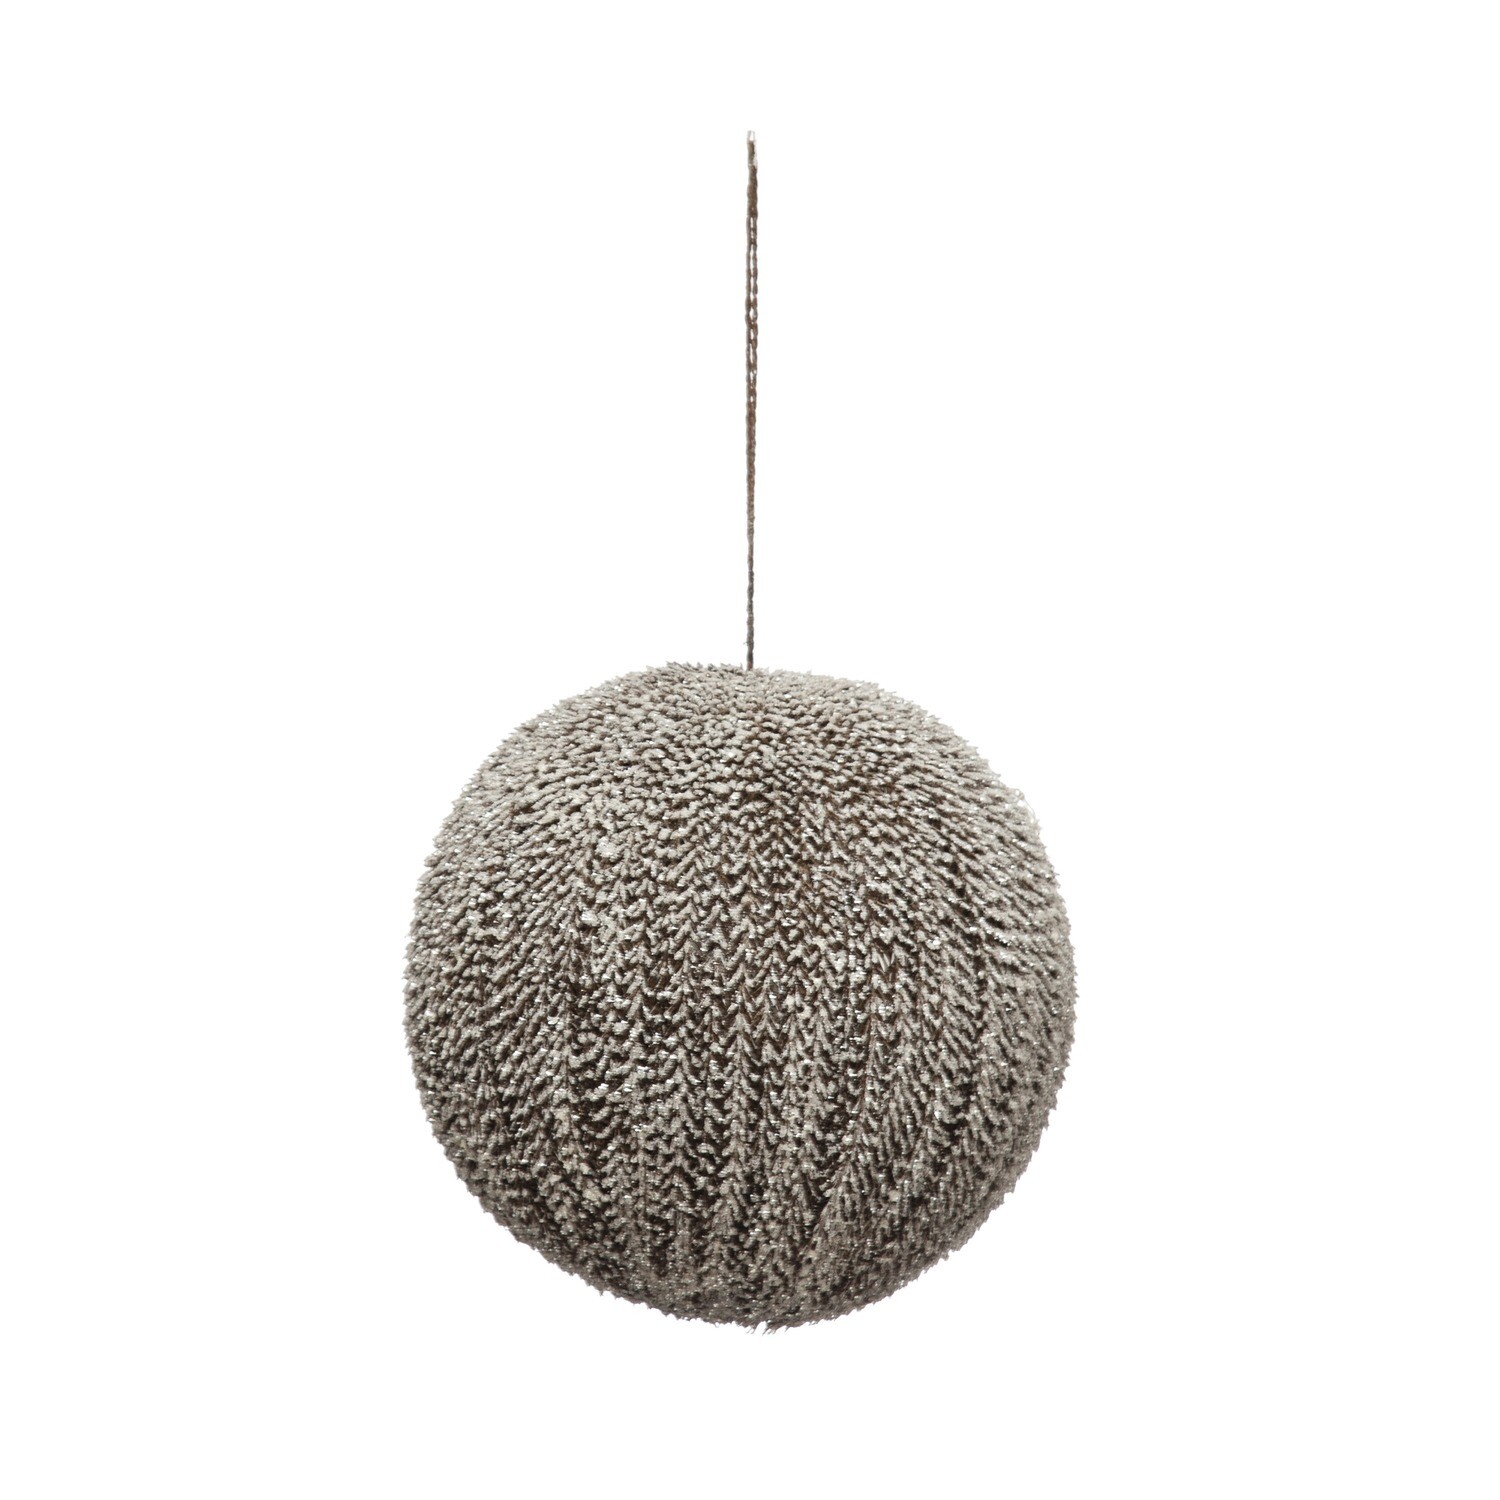 Round Textured Plastic Ball Ornament, Snow Finish